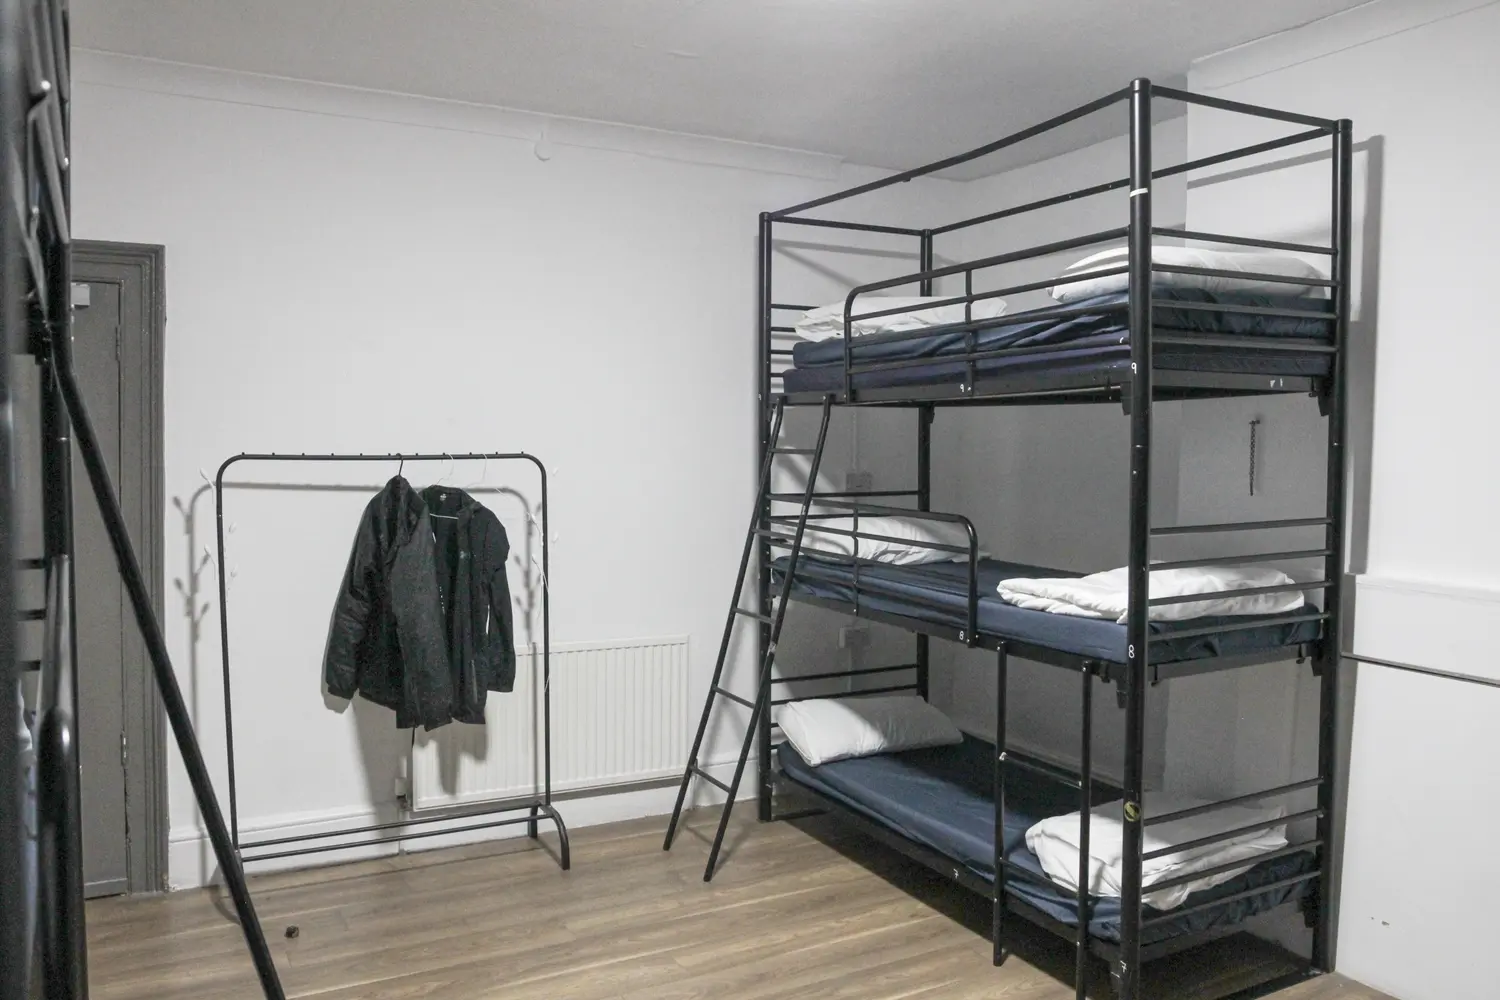 Dorm room at the Onefam Waterloo hostel in London